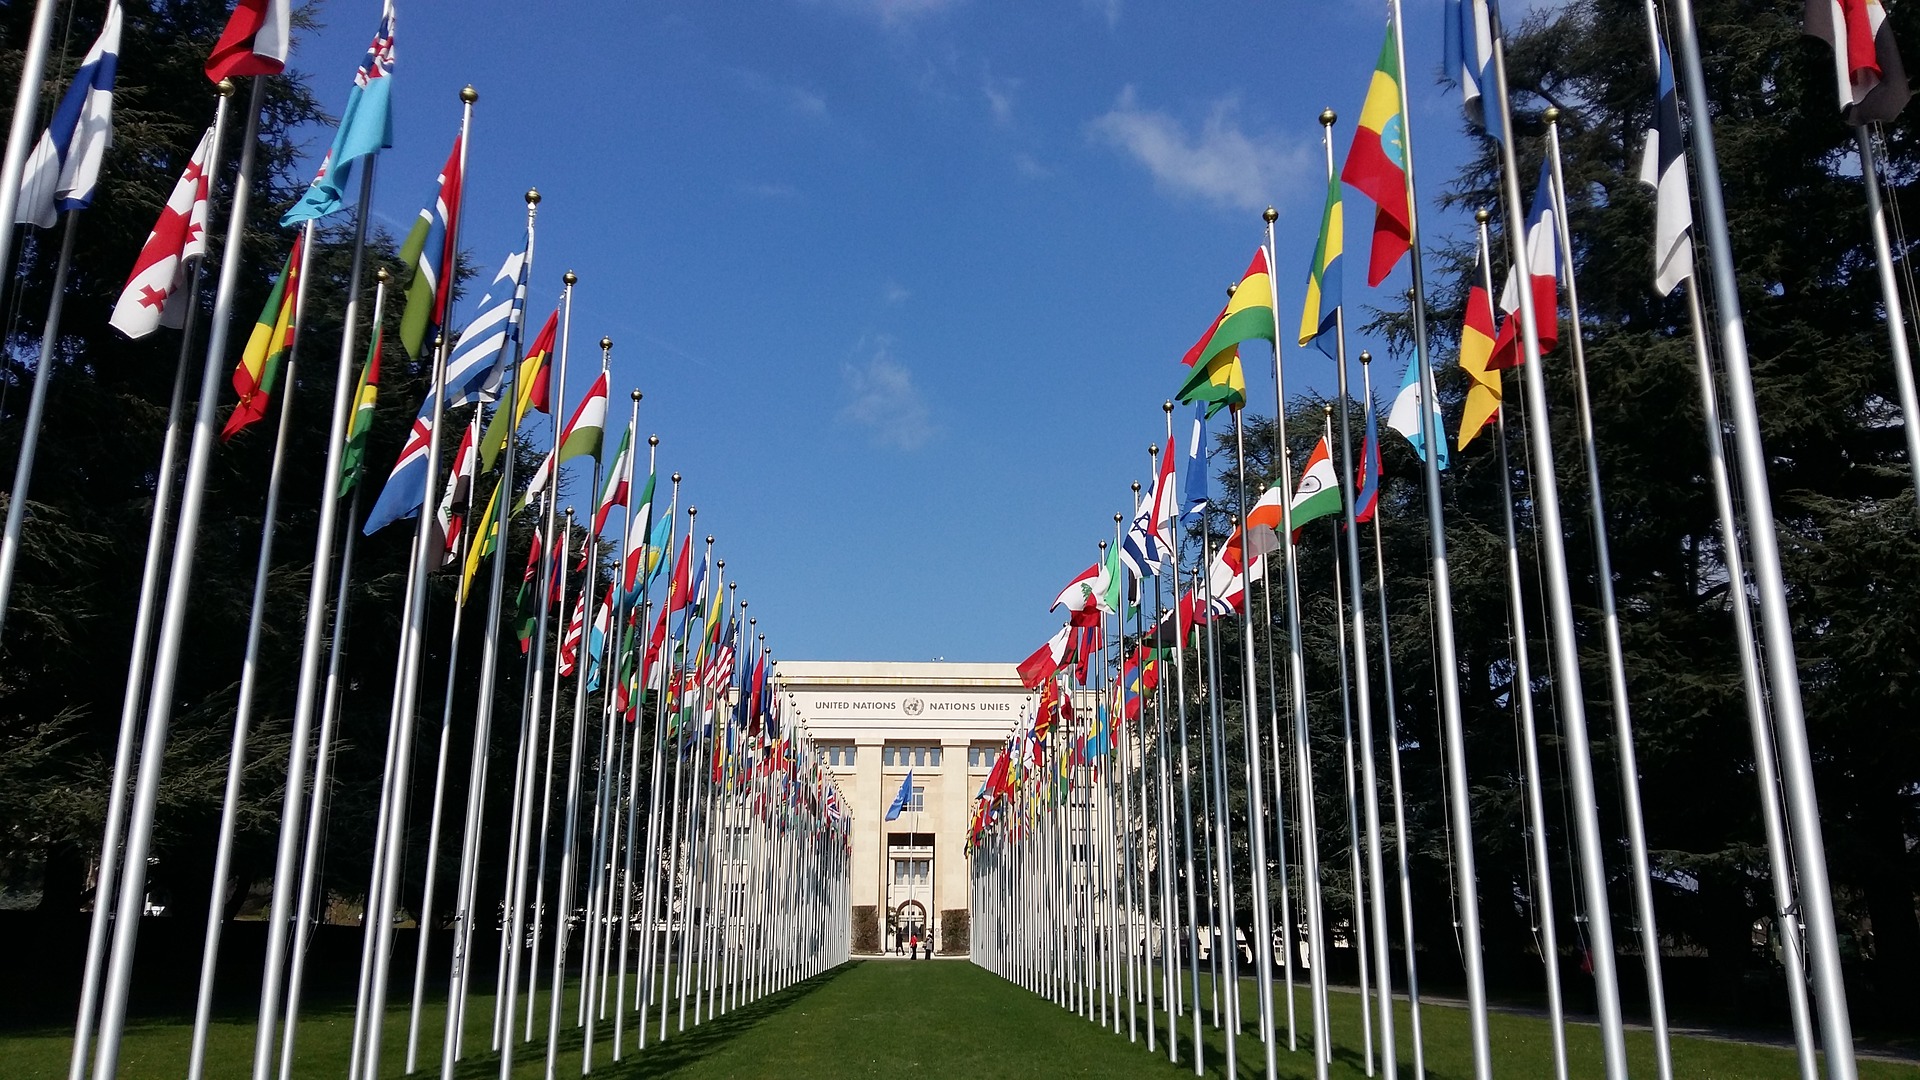 Членство оон. Дворец наций в Женеве. Штаб квартира ООН В Женеве. Дворец наций в Женеве фото. Женева ООН флаги.